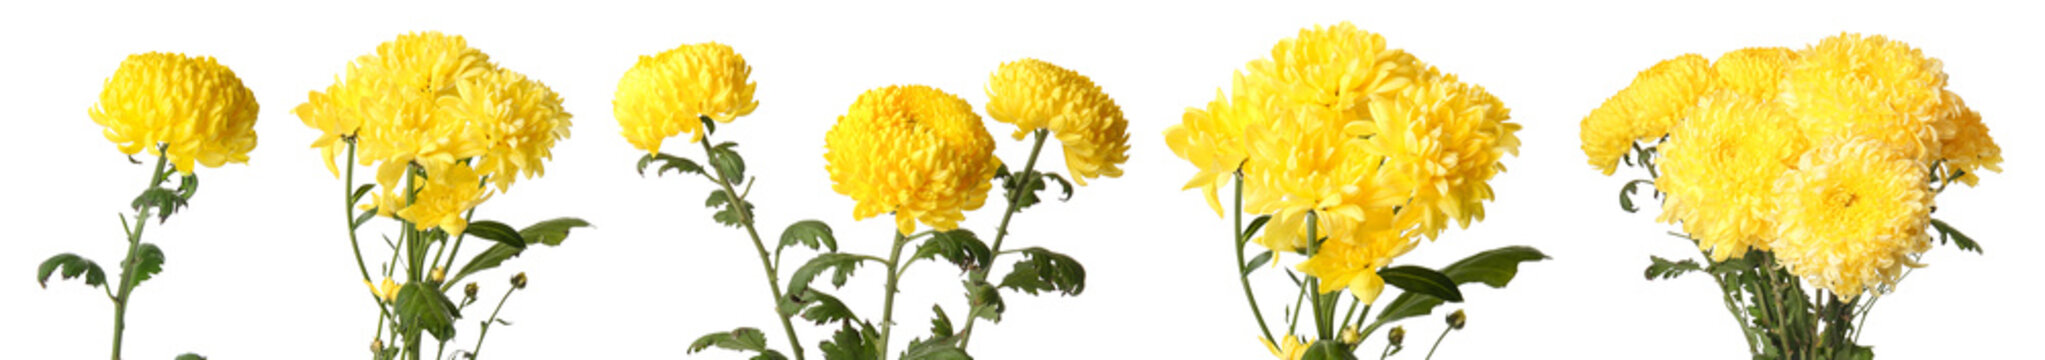 Set of beautiful yellow chrysanthemum flowers isolated on white